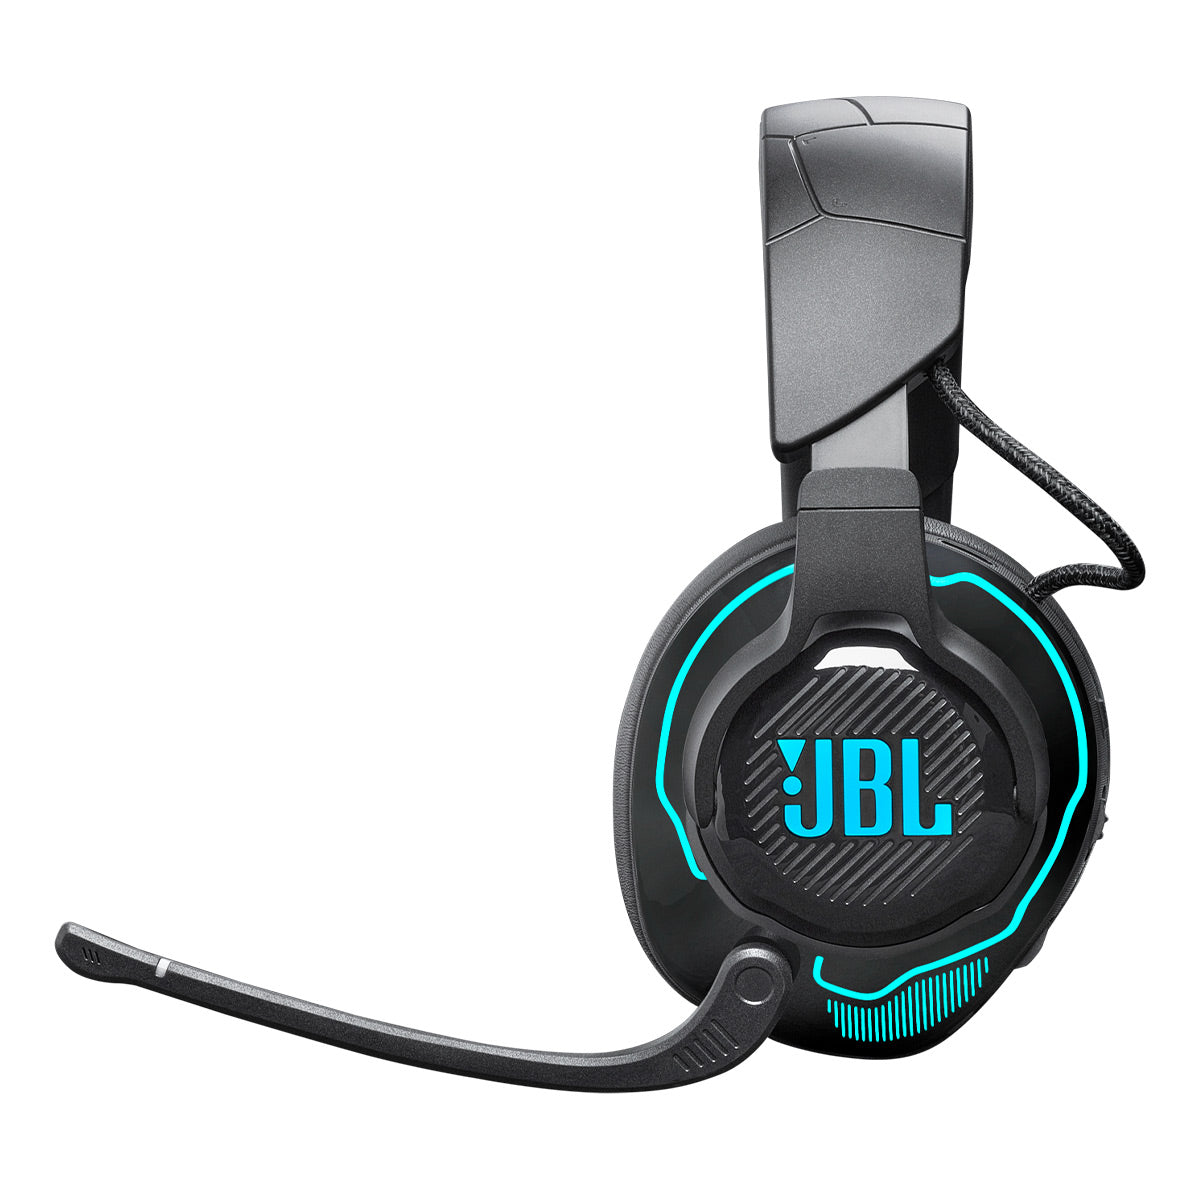 JBL Quantum 910 Wireless Headset Review – A Quantum Leap